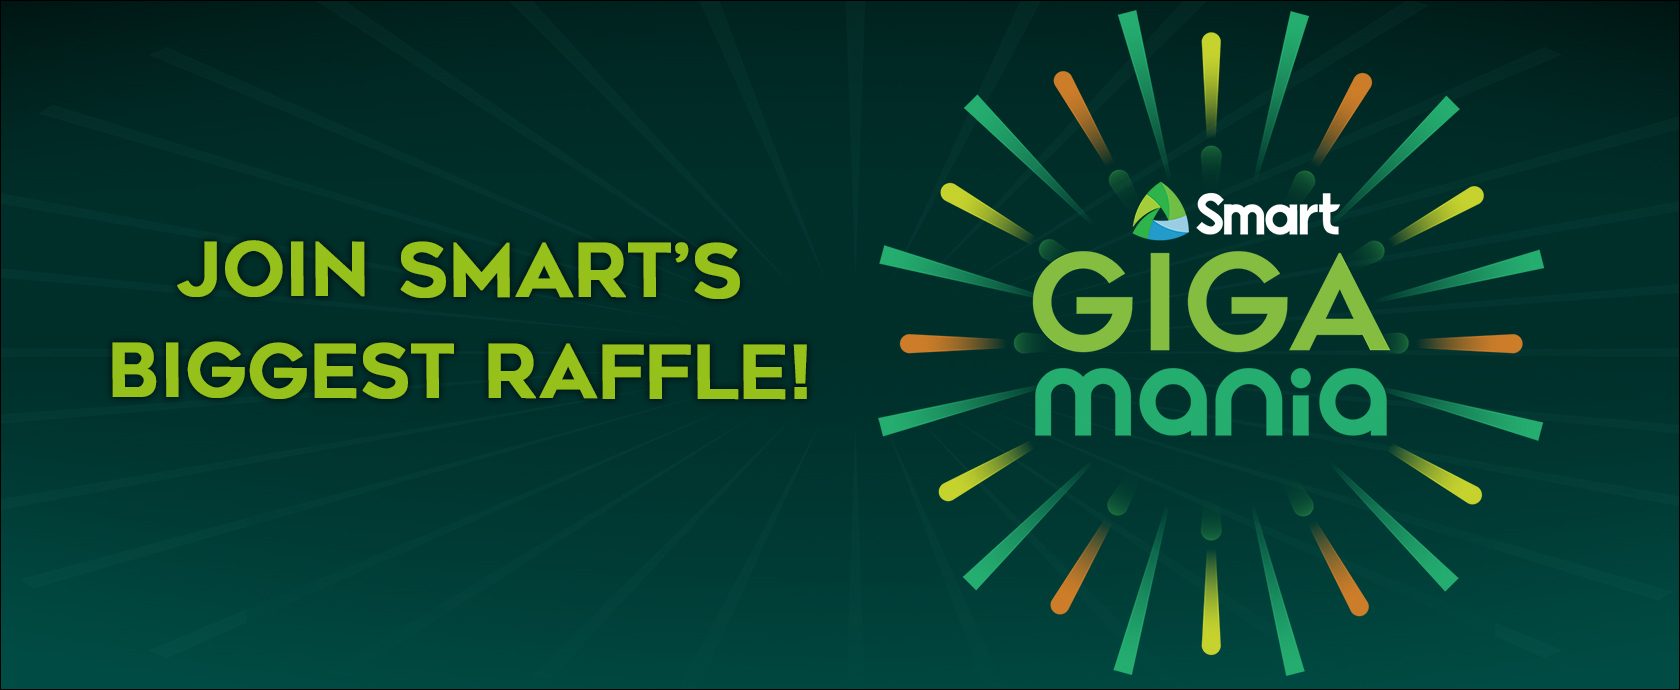 Win more than P30 million worth of cash, smartphones, and data in Smart’s Giga Mania raffle promo